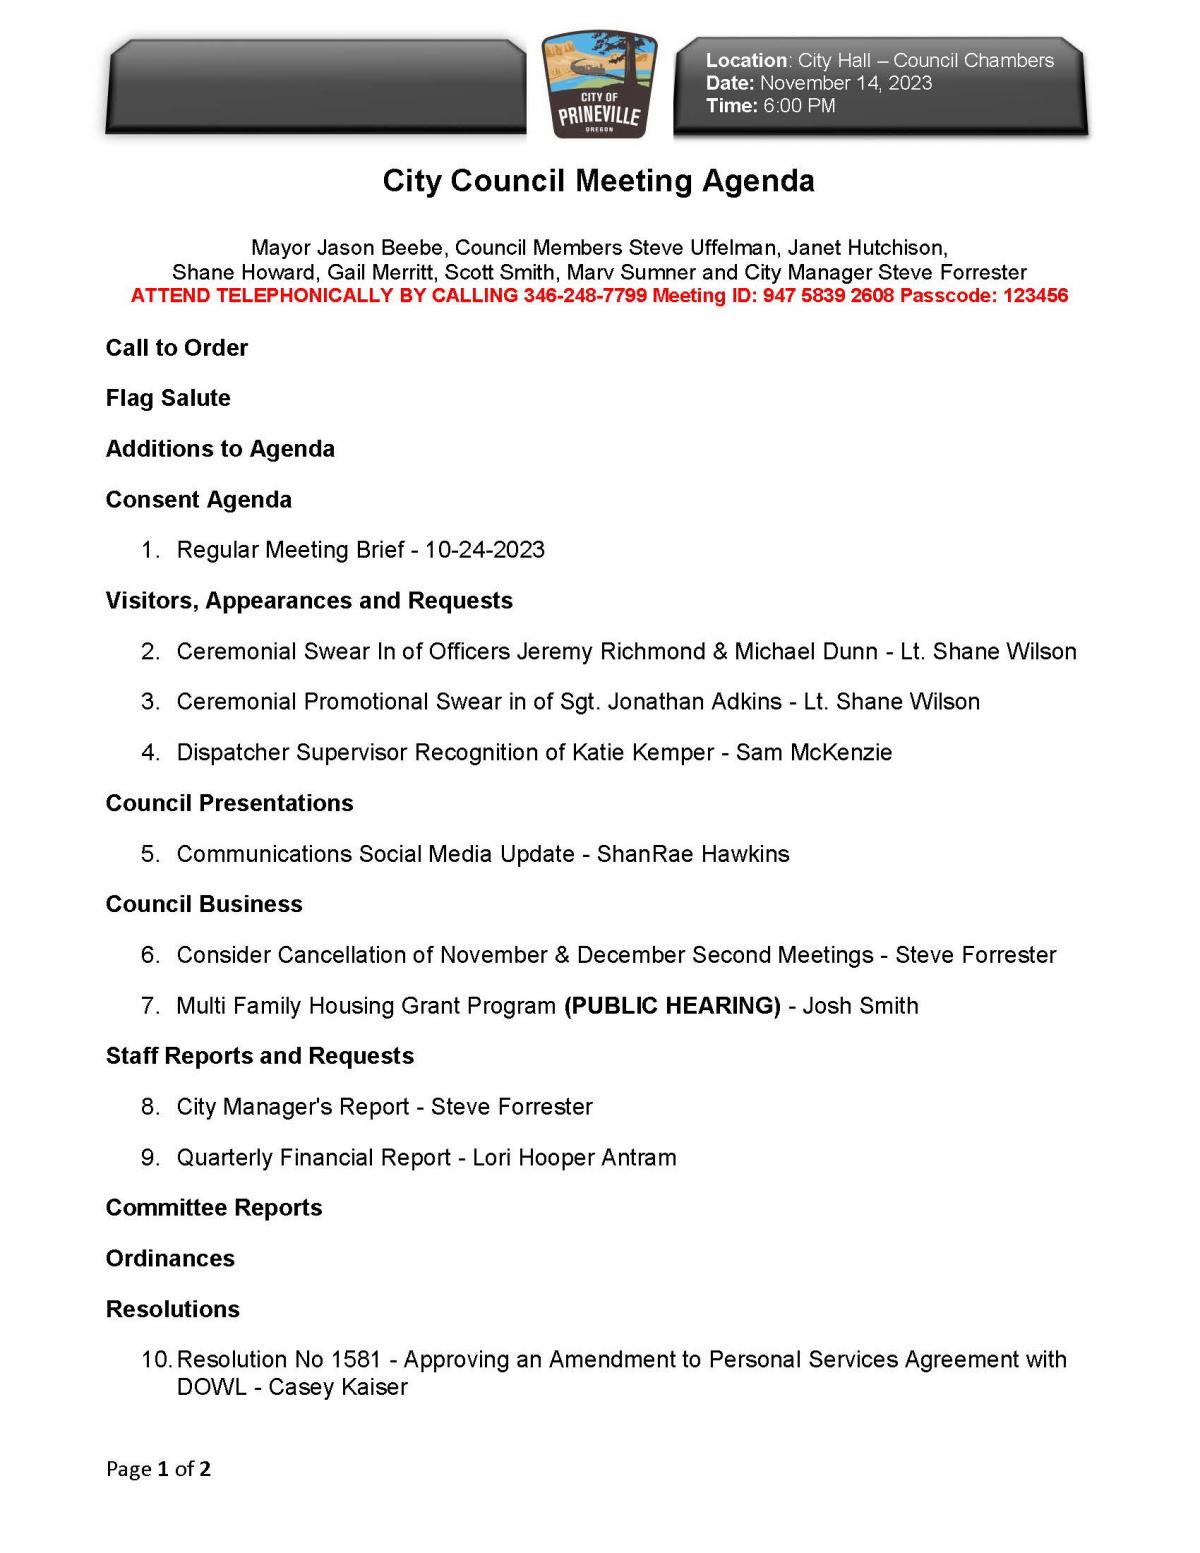 Council Agenda 11-14-2023